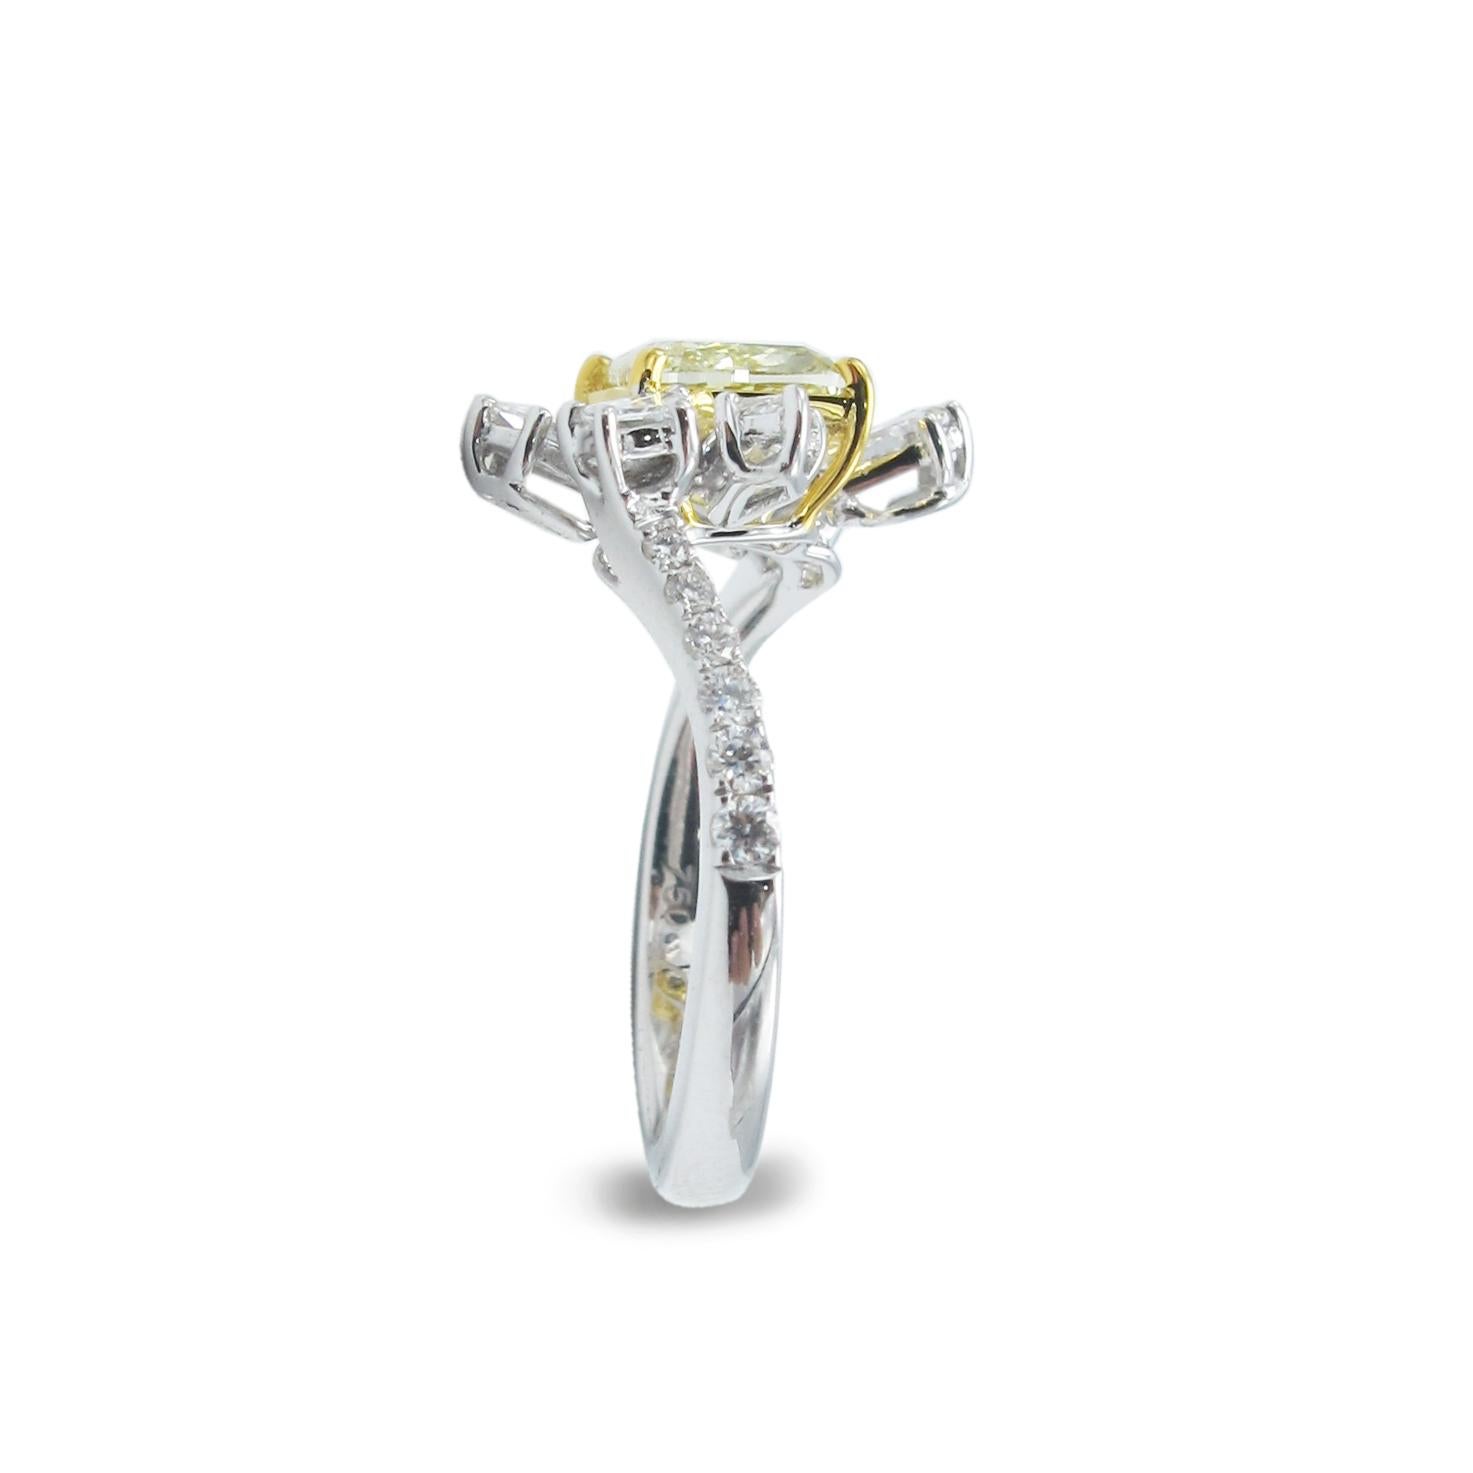 Emilio Jewelry 1.93 Carat Intense Yellow Diamond Cocktail Ring For Sale 1